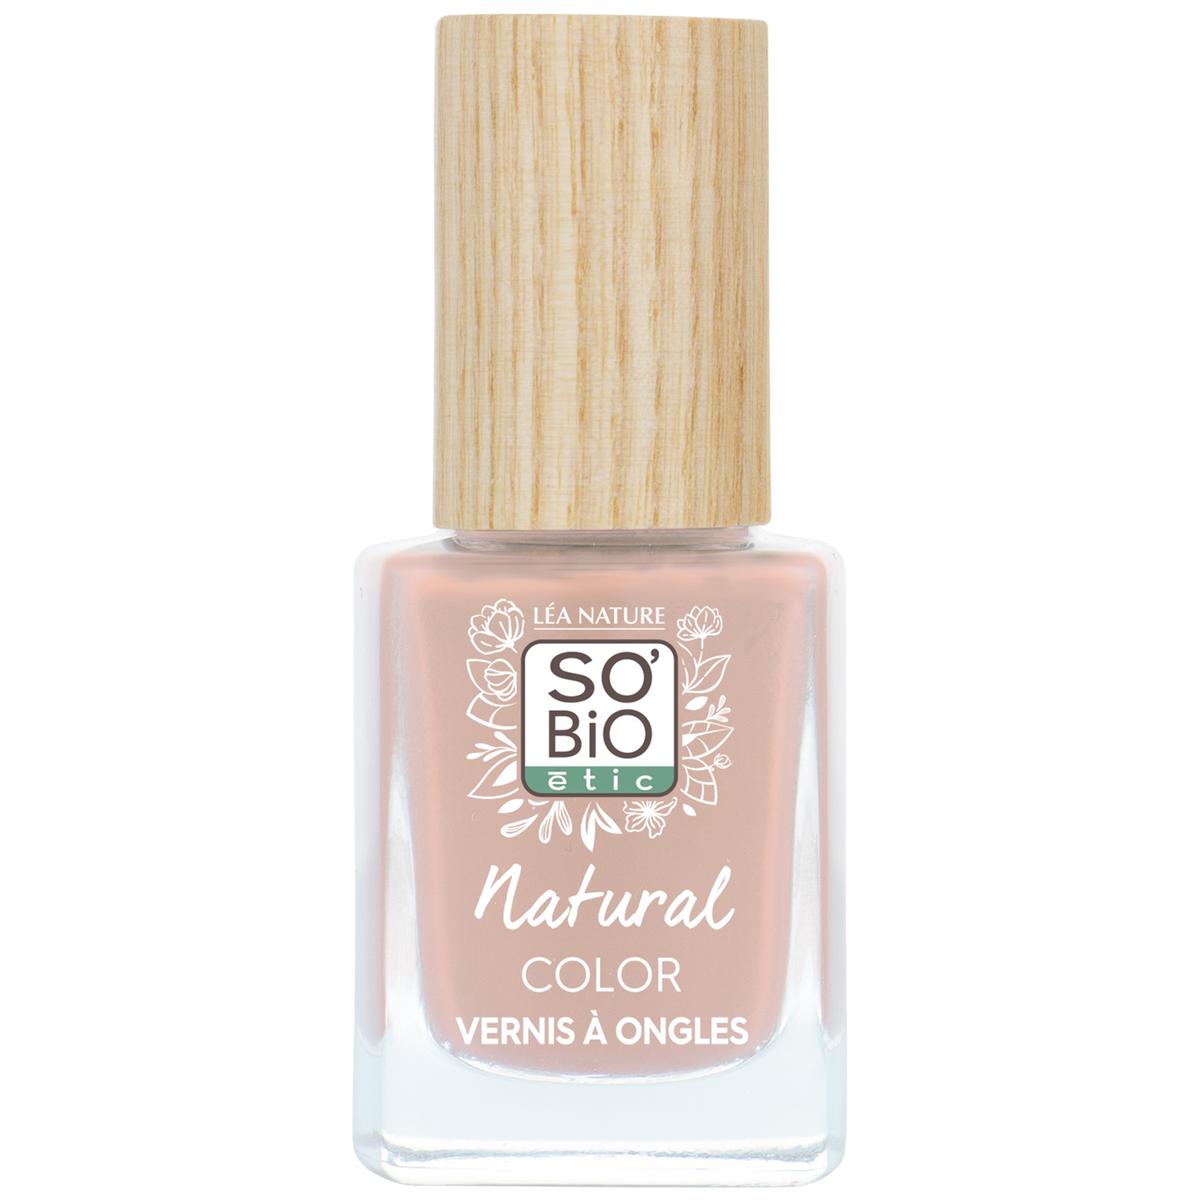 SO'BIO ETIC Vernis à ongles, Natural Color, 60 Romantique rose 11 ml